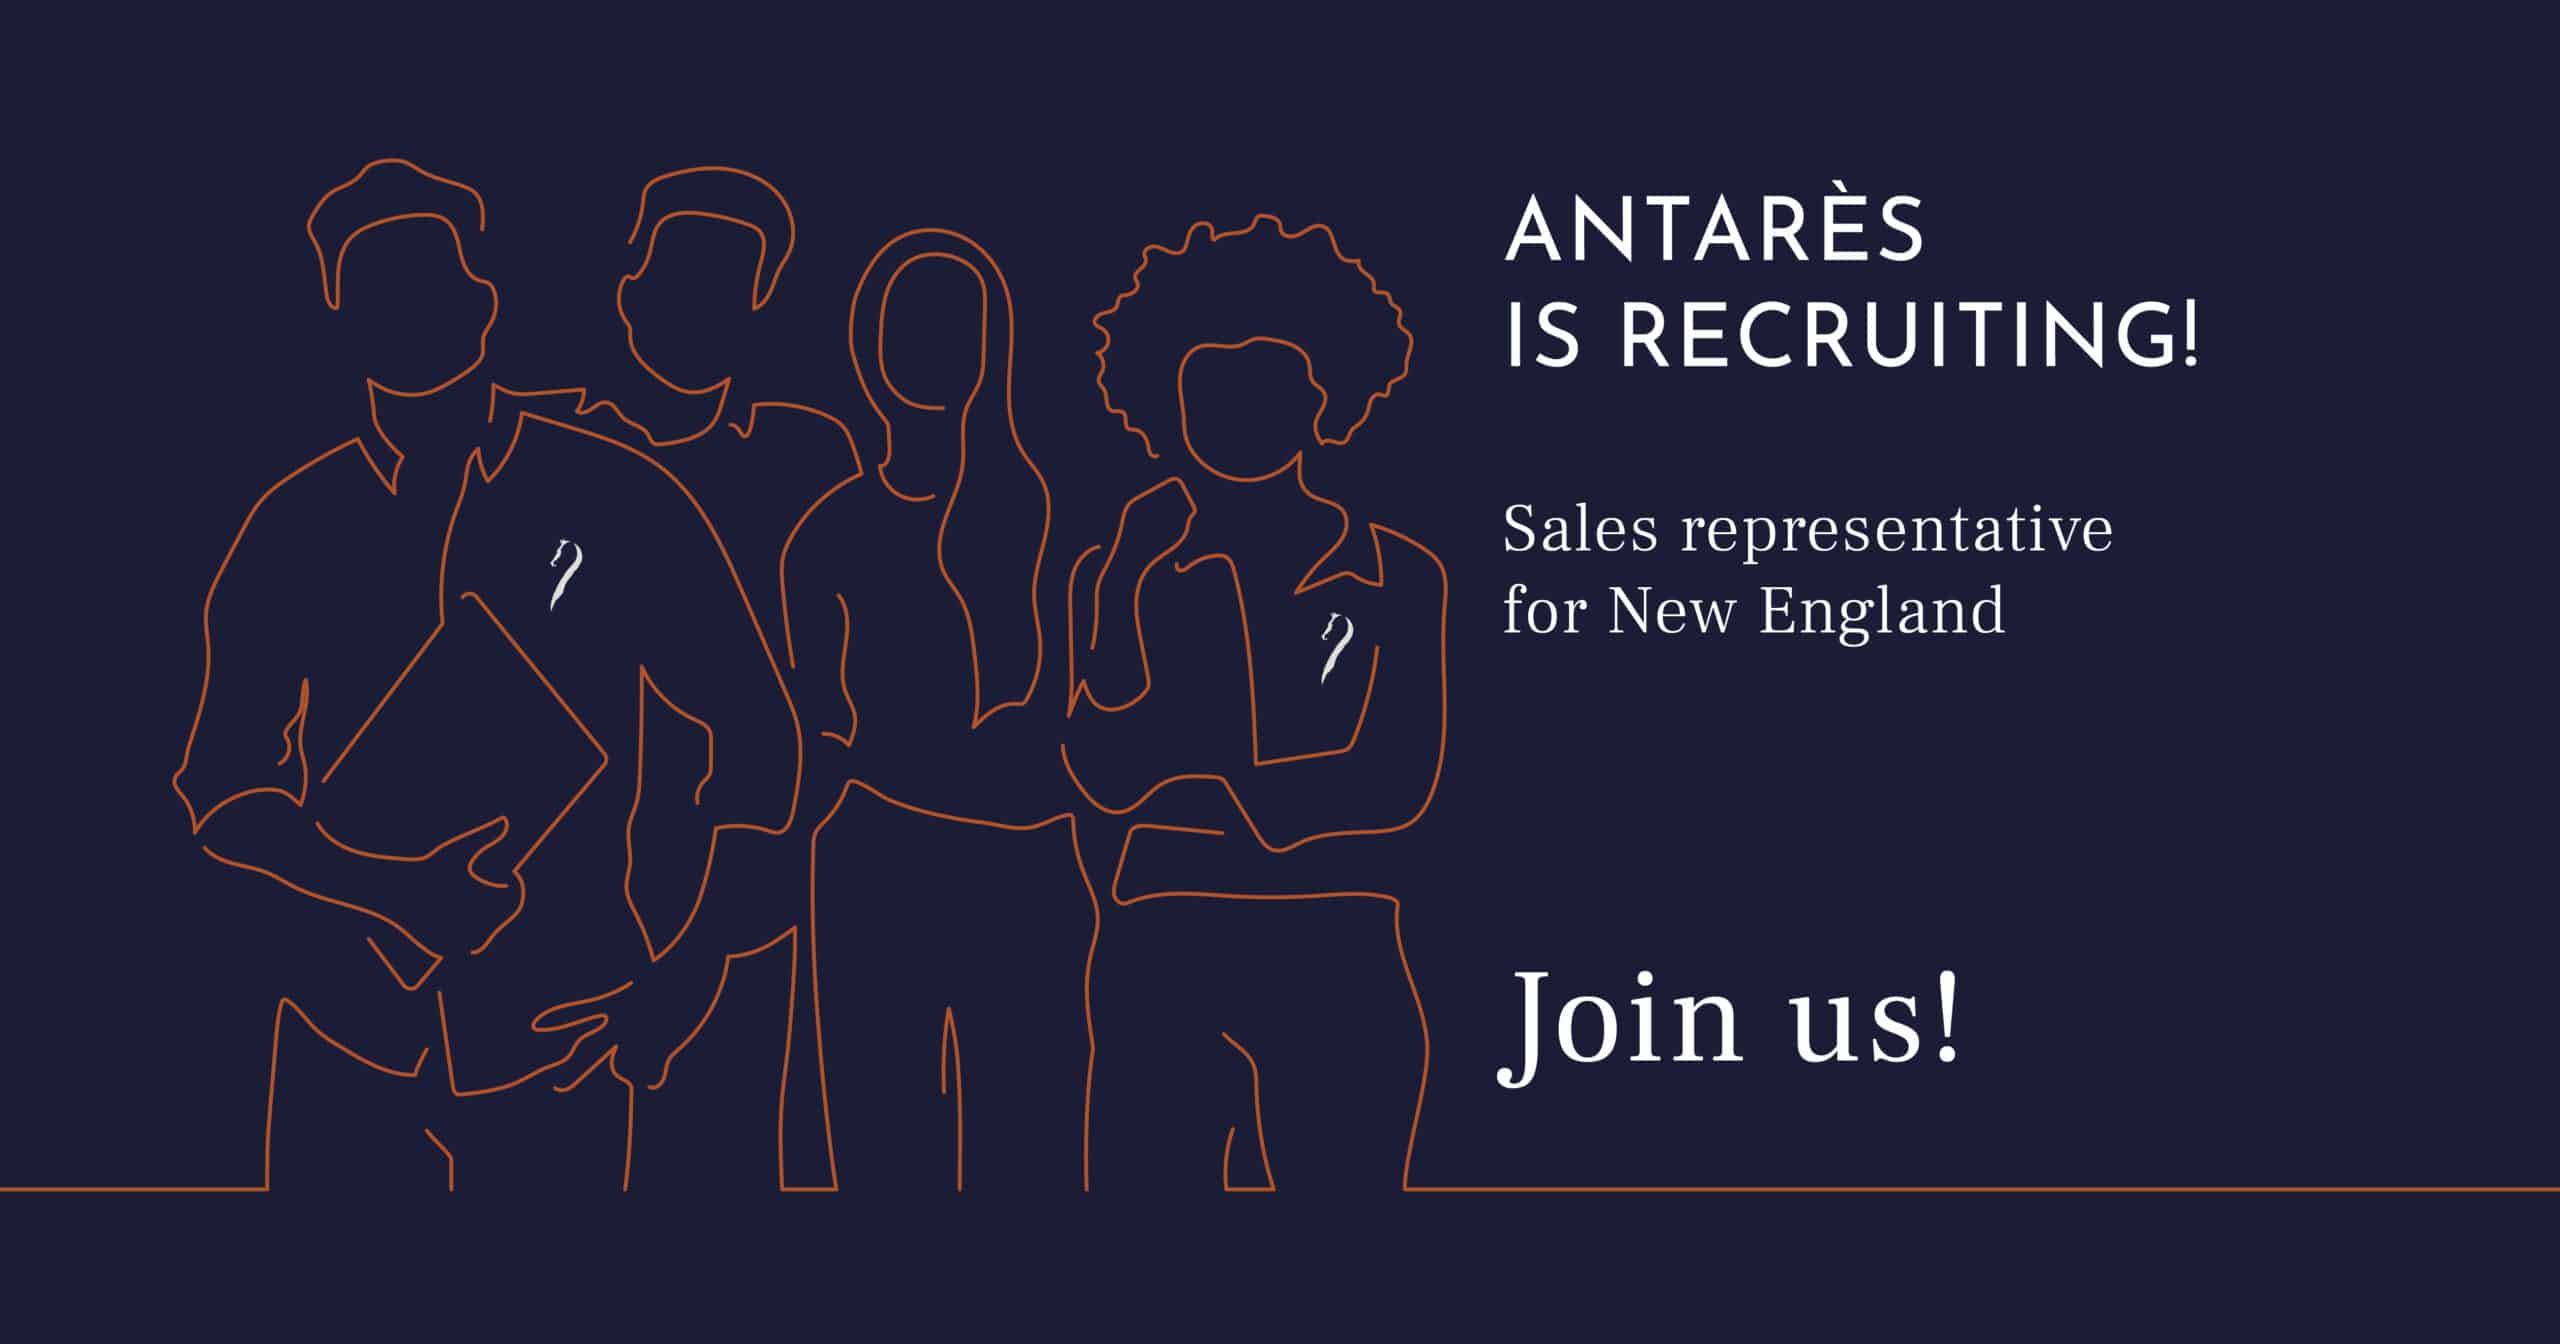 Recruitment of a sales representative for New England